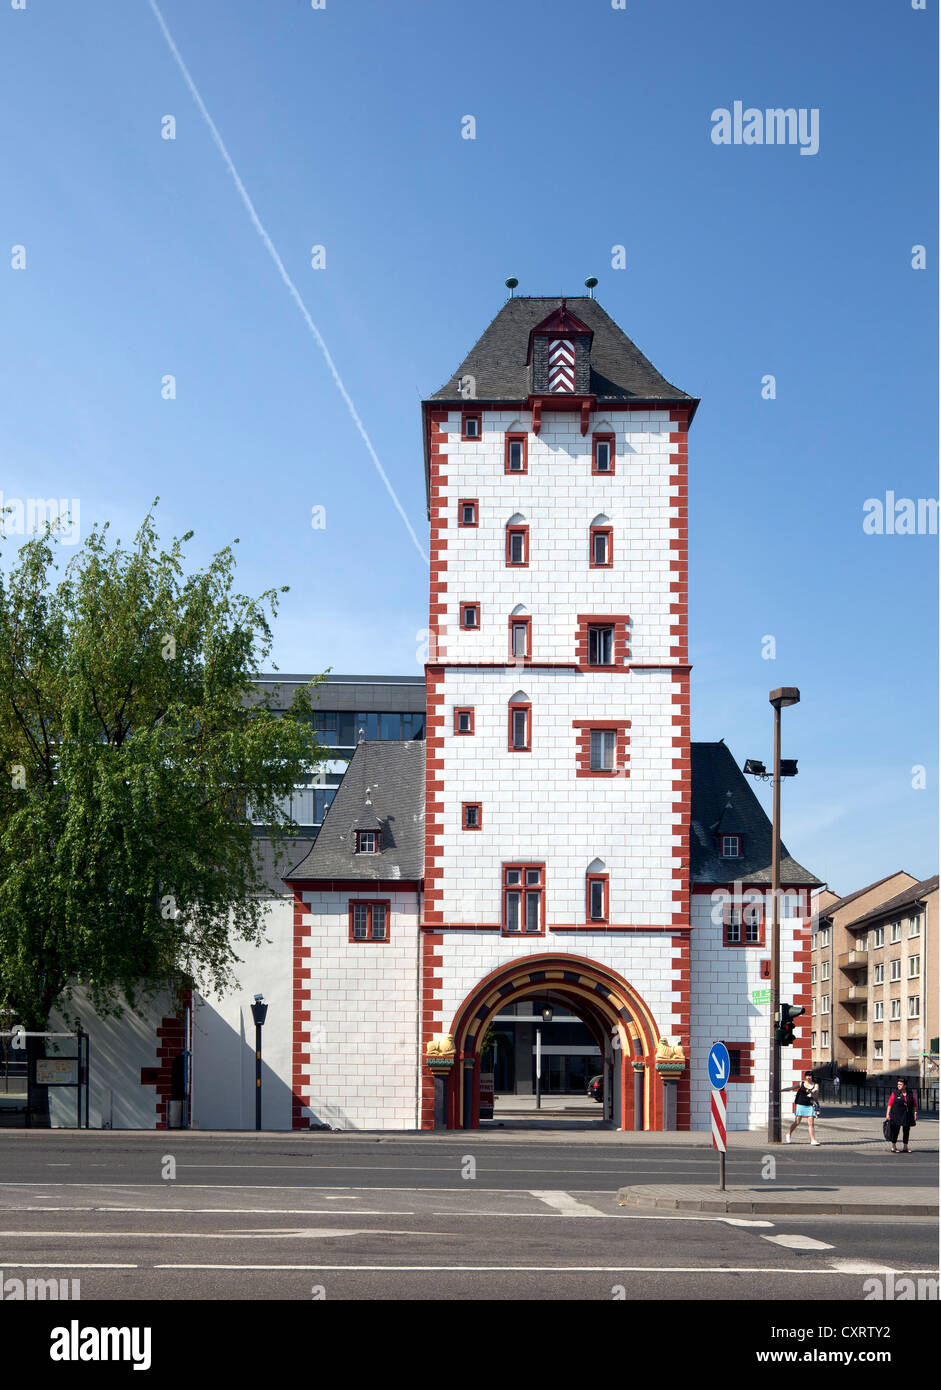 Eisenturm tower of the medieval city walls, Mainz Art Society, Mainz, Rhineland-Palatinate, Germany, Europe, PublicGround Stock Photo